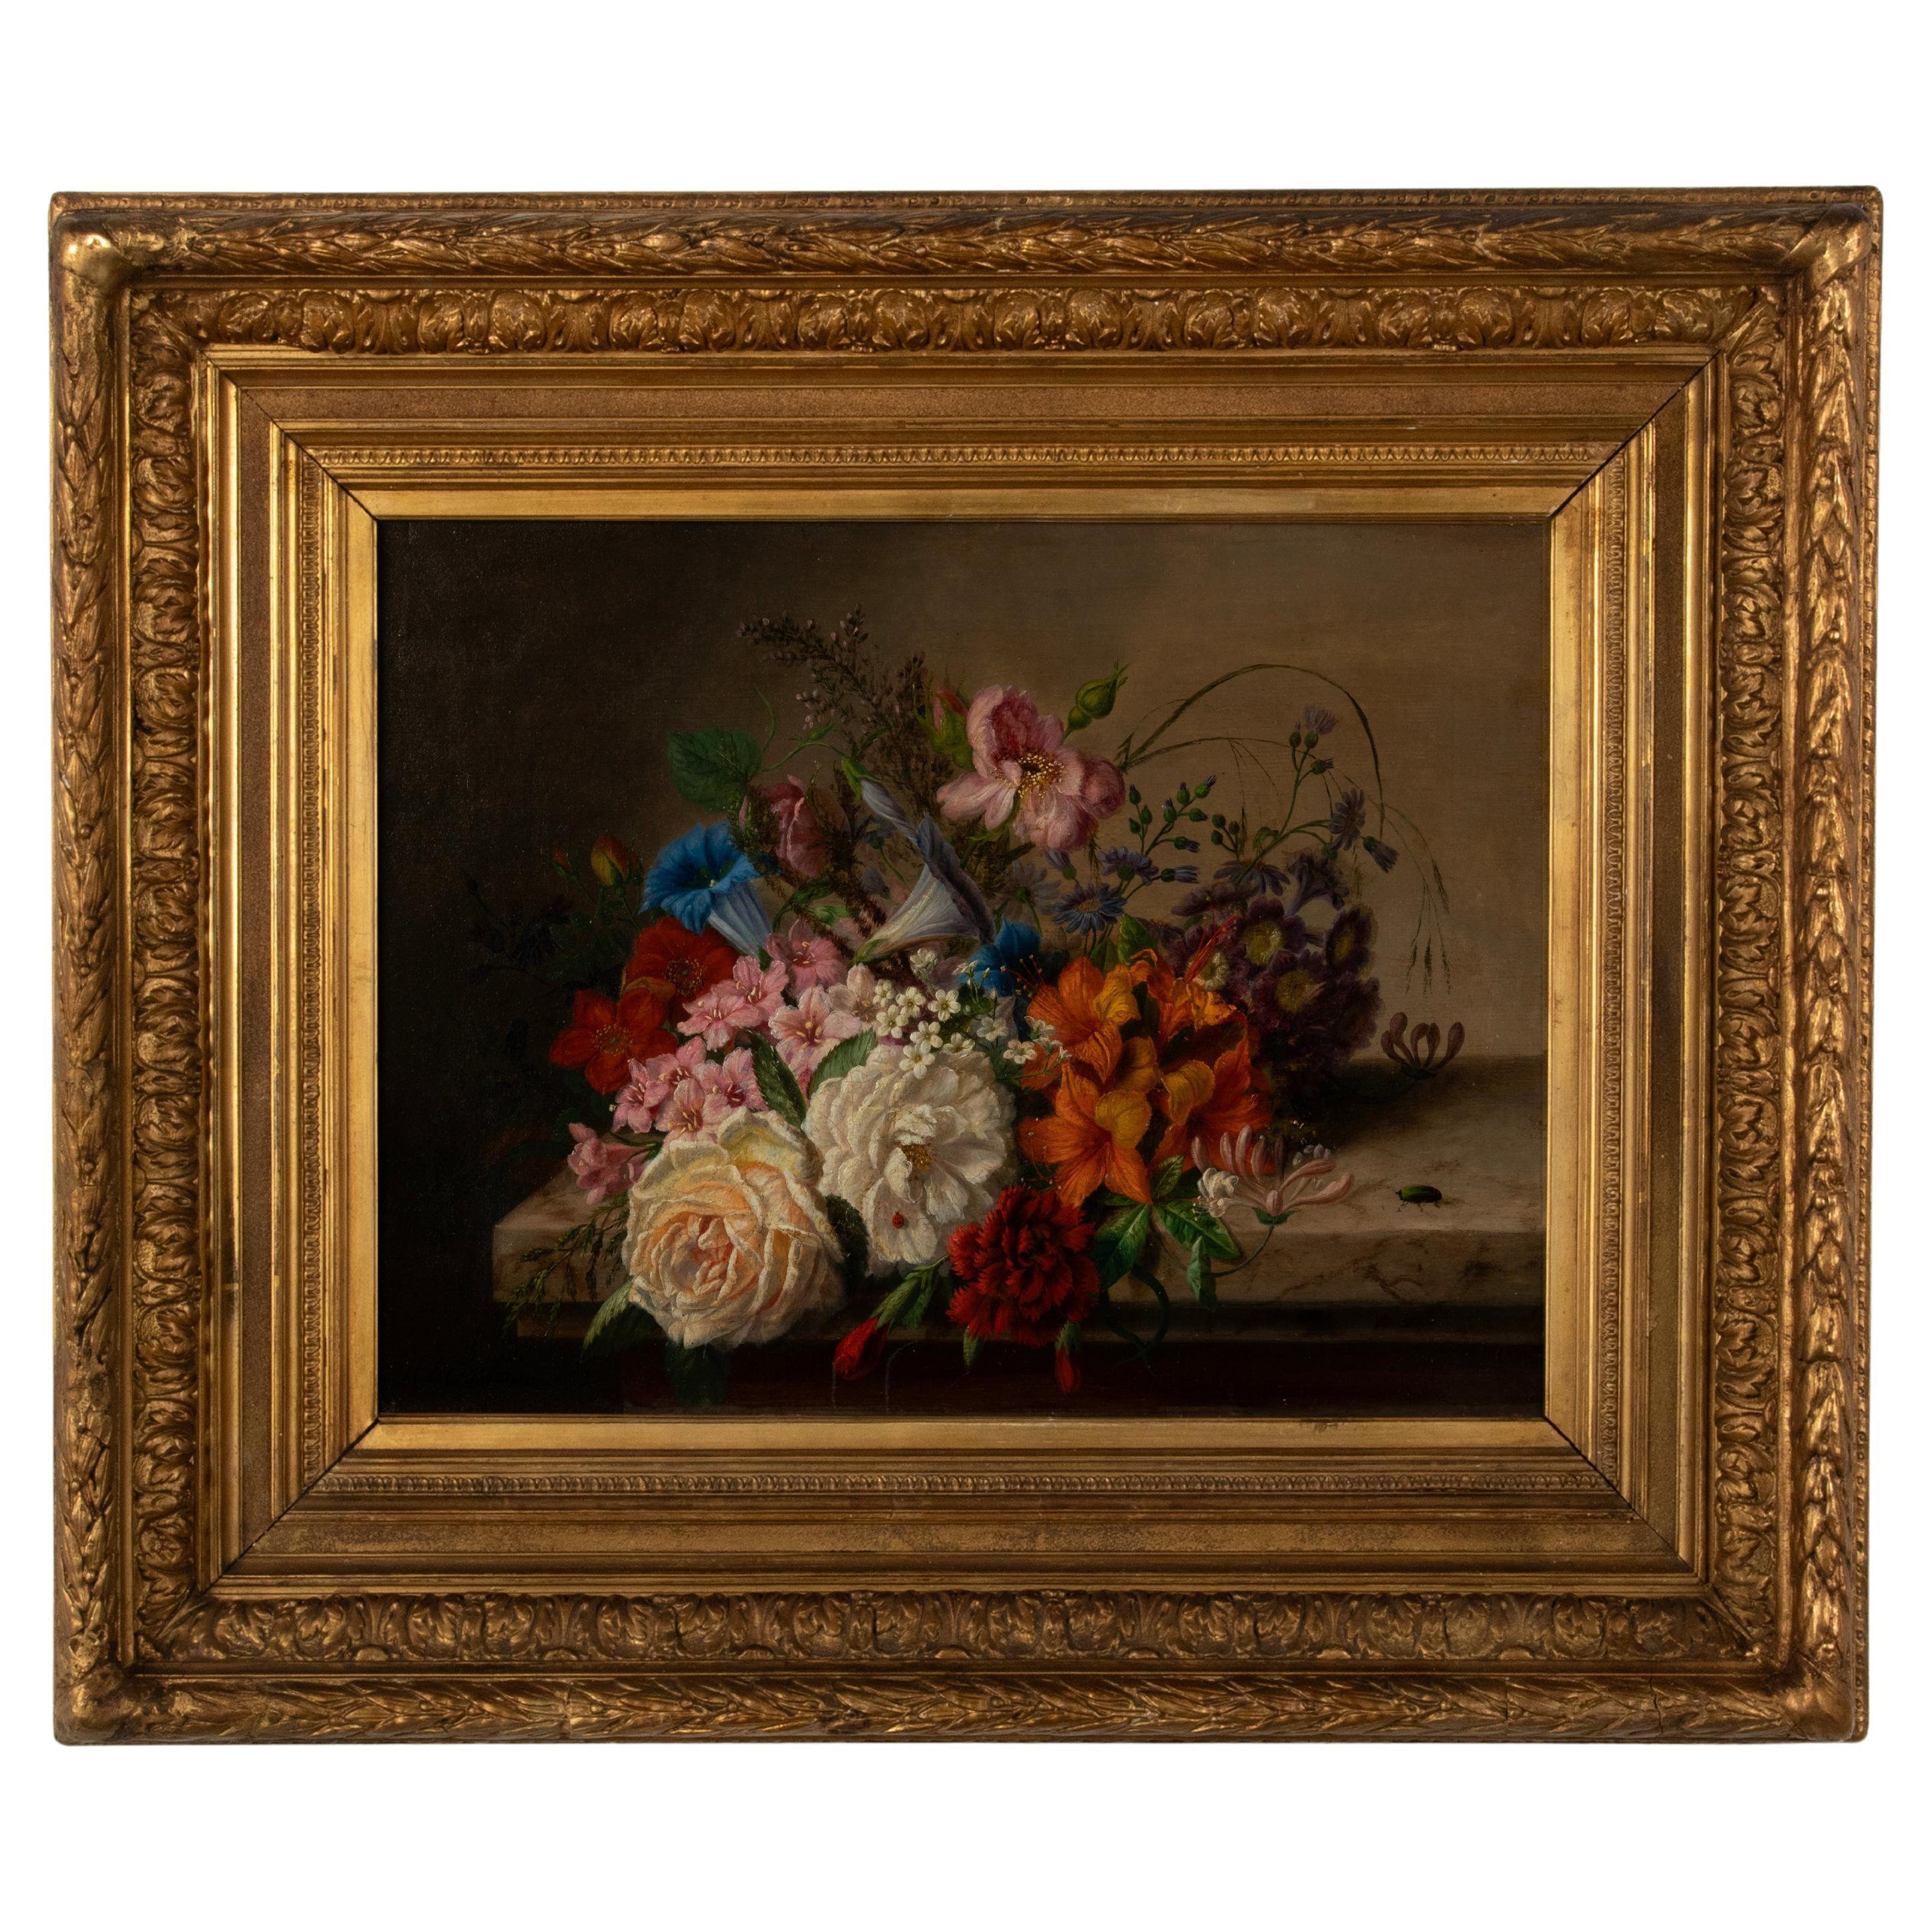 Antique Oil Painting - Renaissance Style Flower Still Life - V. de Sartorius  